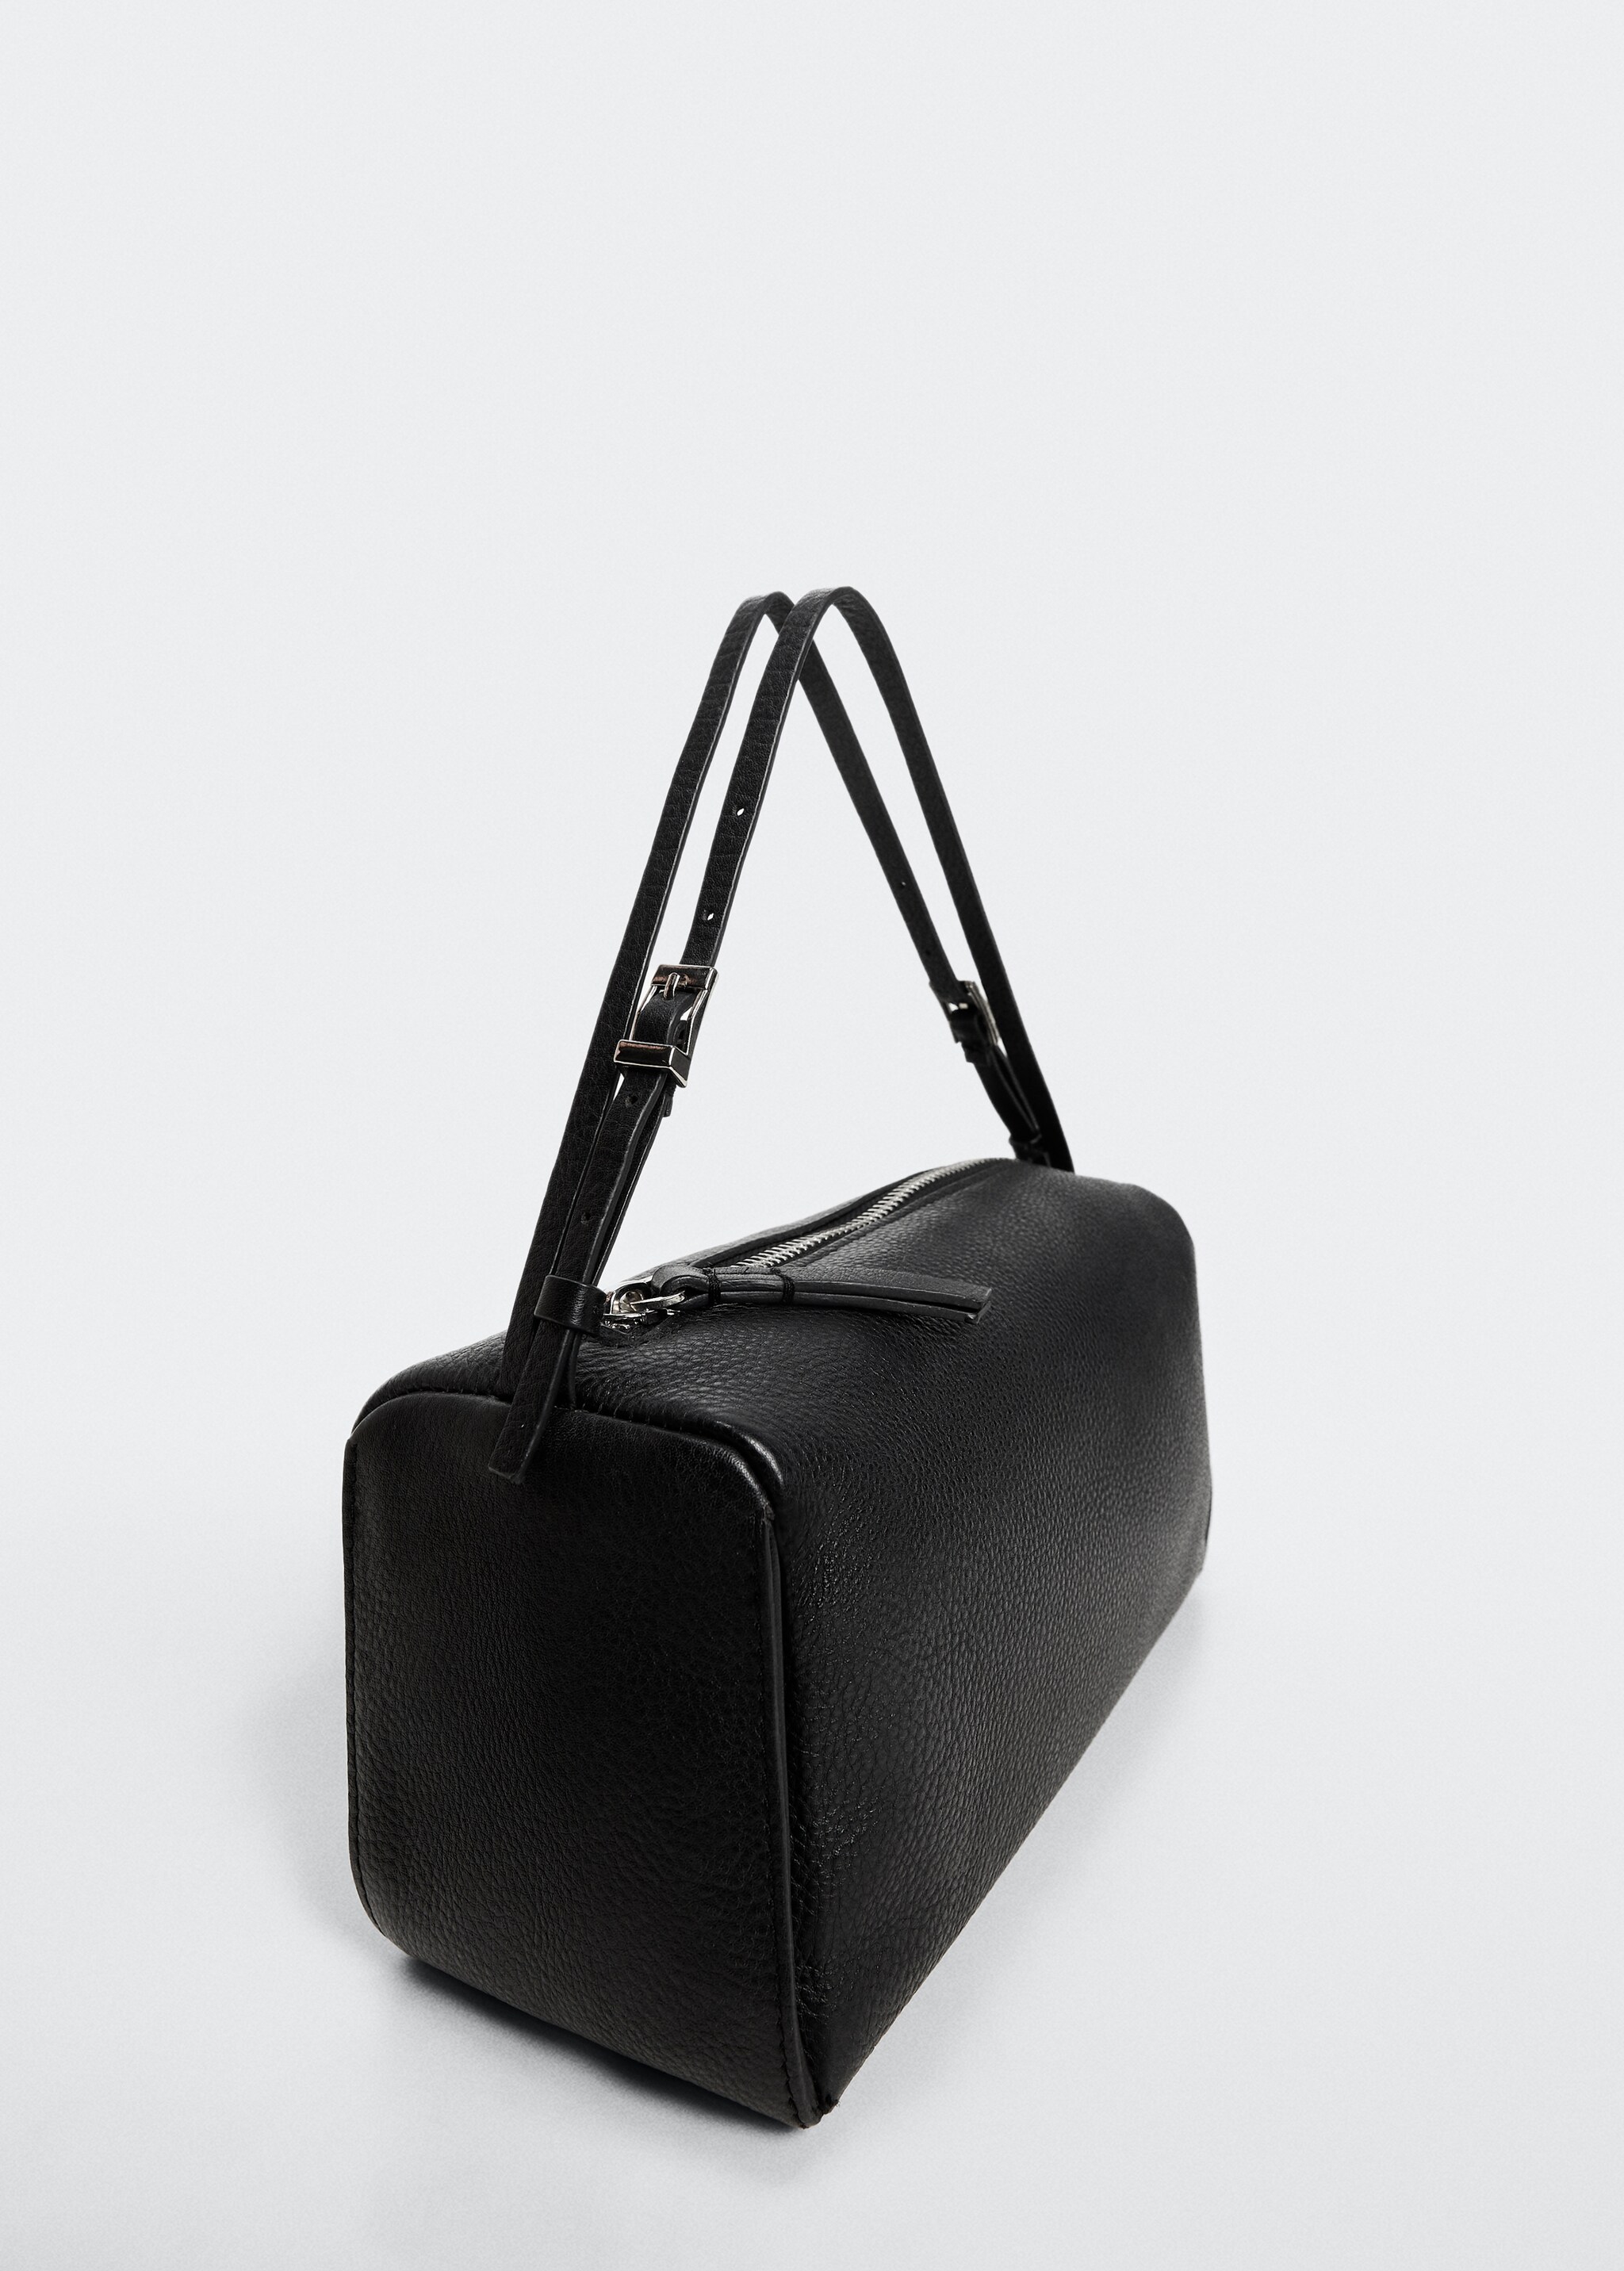 Small leather bag - Medium plane